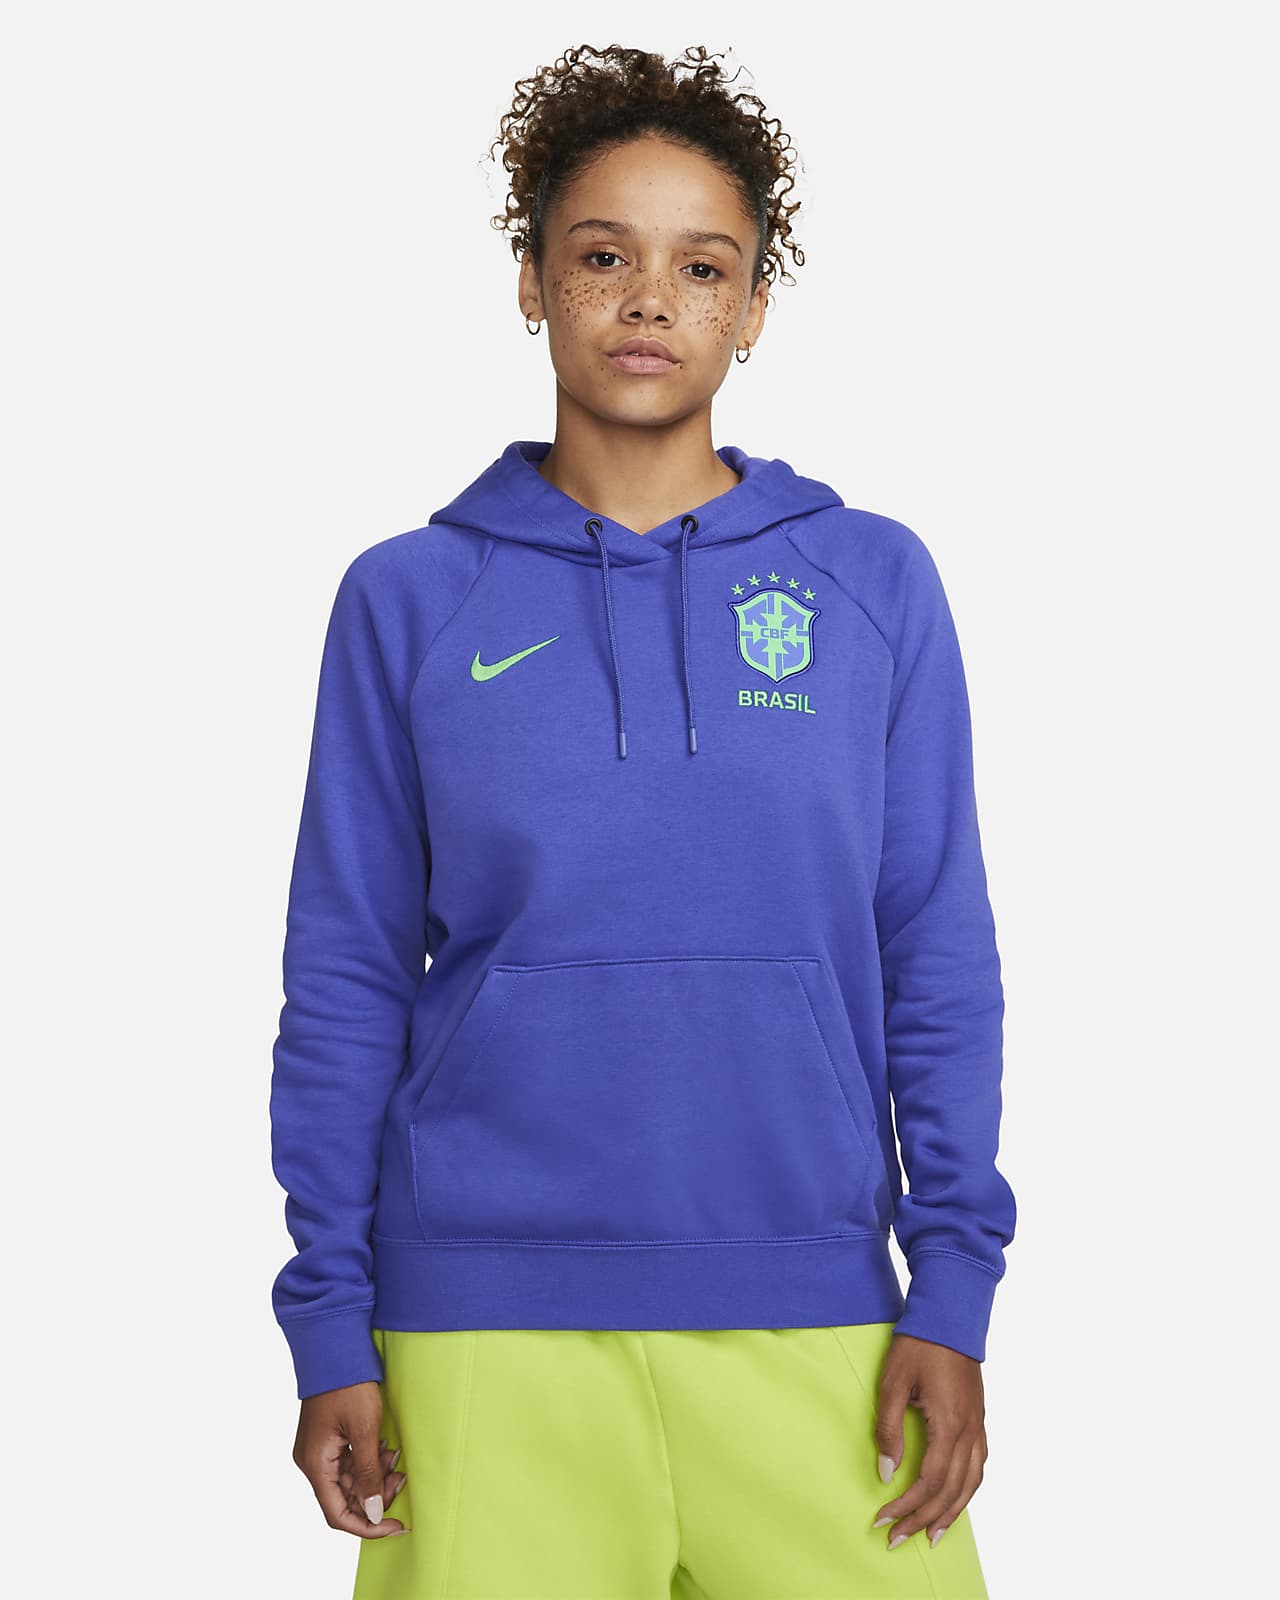 Brazil Women's Fleece Pullover Hoodie. Nike.com